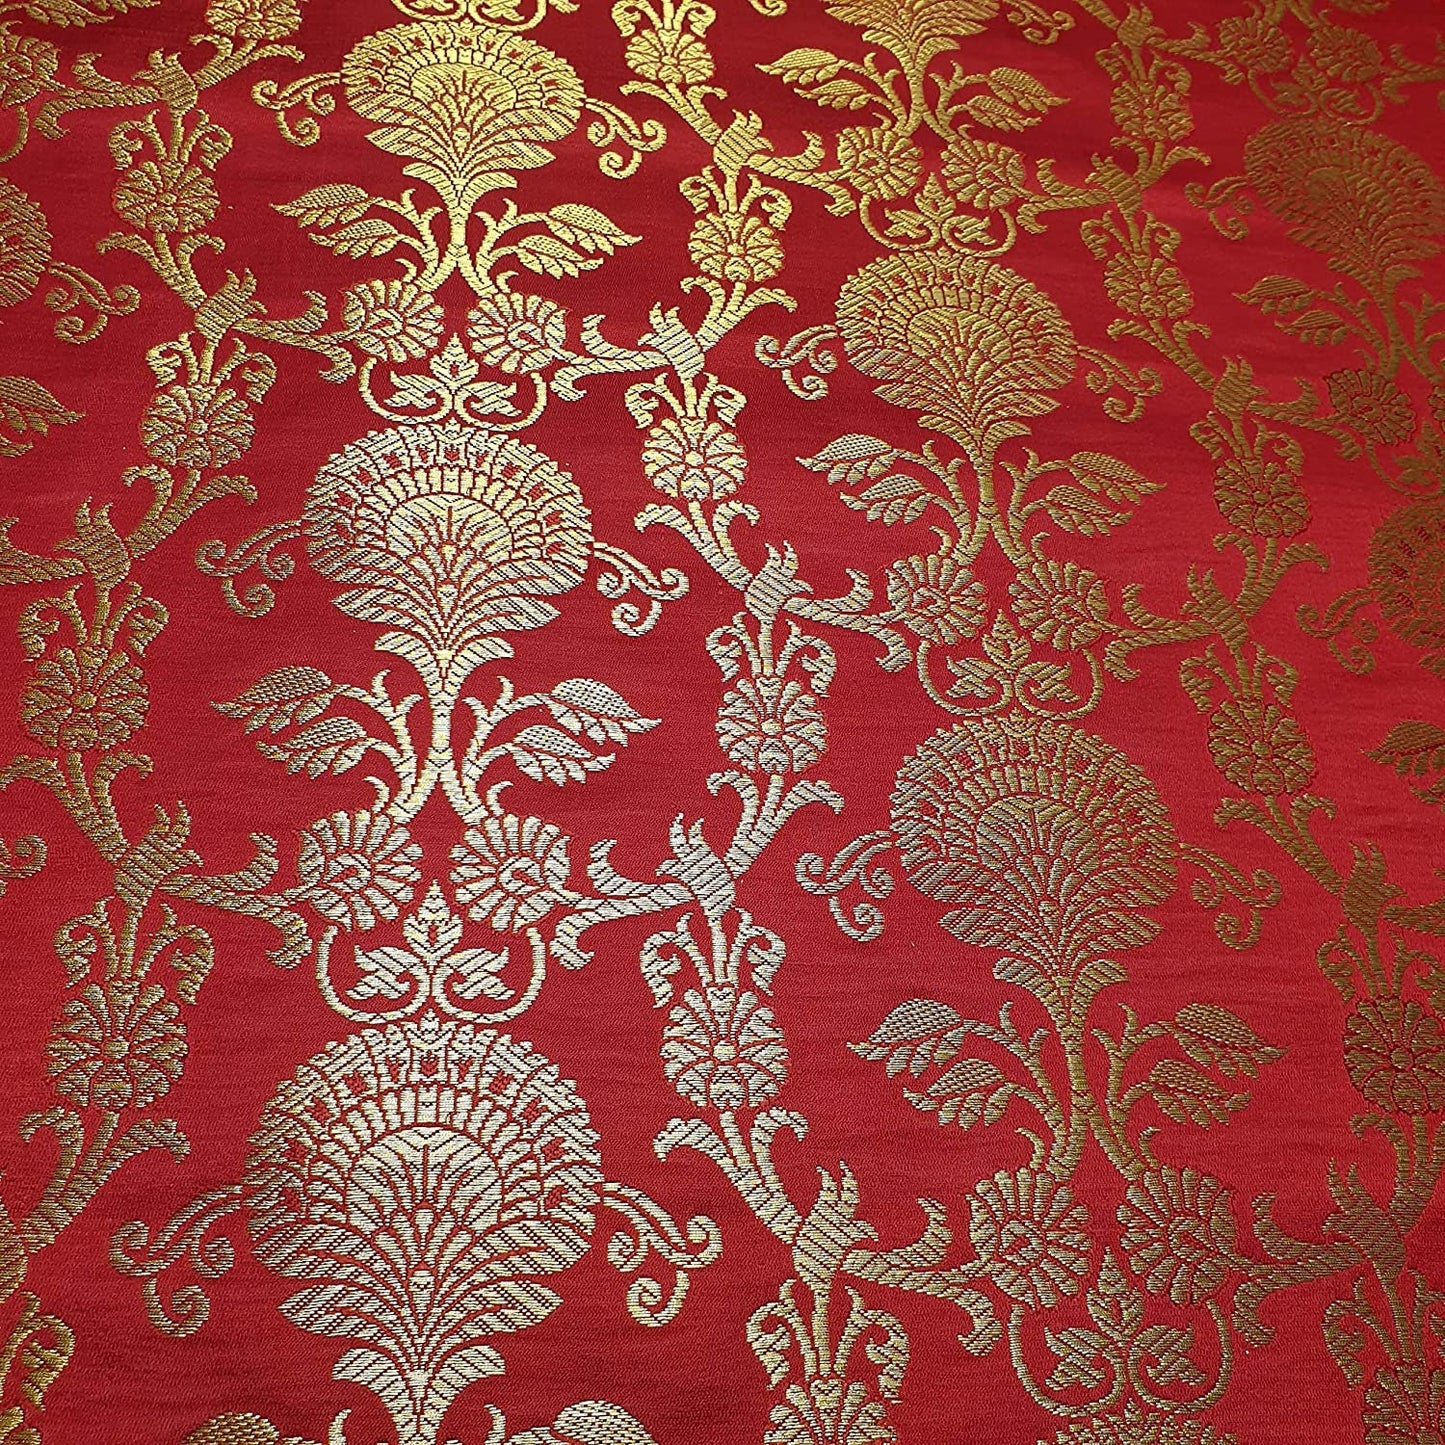 Ornamental Christmas Red Floral Gold Metallic Print Indian Banarasi Brocade Fabric